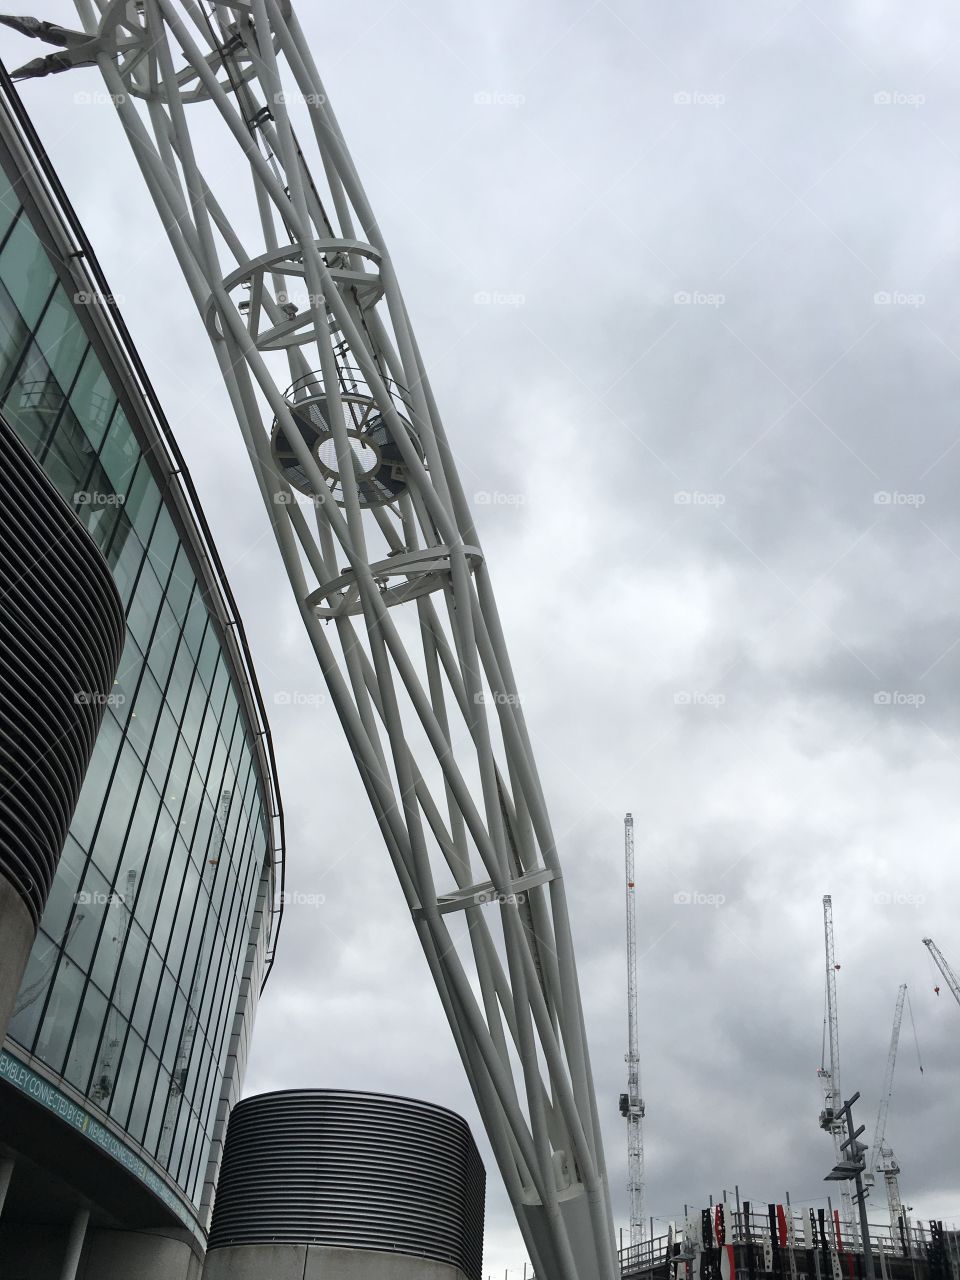 Wembley Stadium 